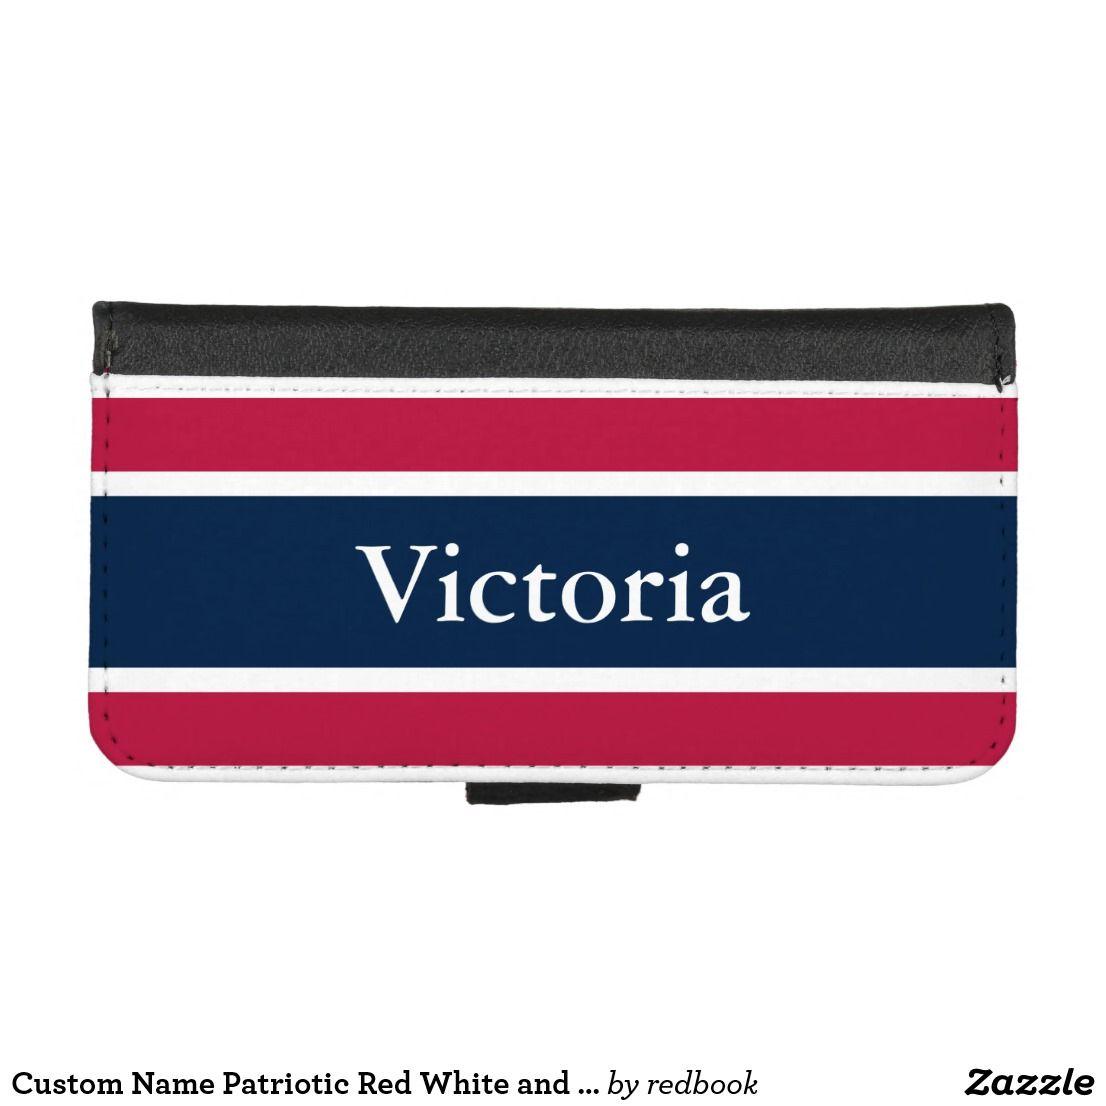 Red White and Blue Stripes Logo - Custom Name Patriotic Red White and Blue Striped iPhone Wallet Case